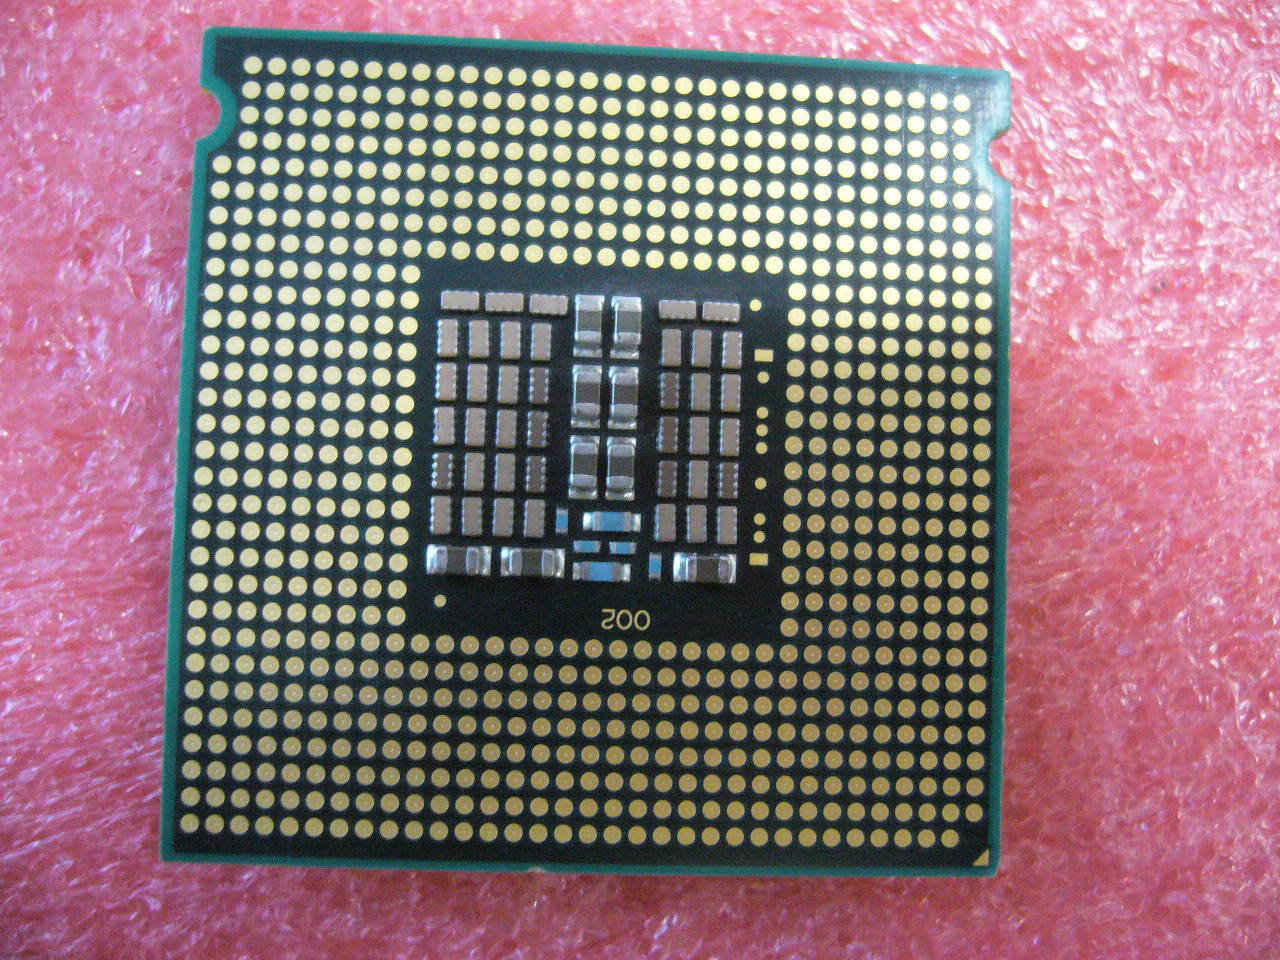 QTY 1x Intel Xeon CPU Quad Core L5408 2.13Ghz/12MB/1066Mhz LGA771 SLBBT TDP 40W - Click Image to Close